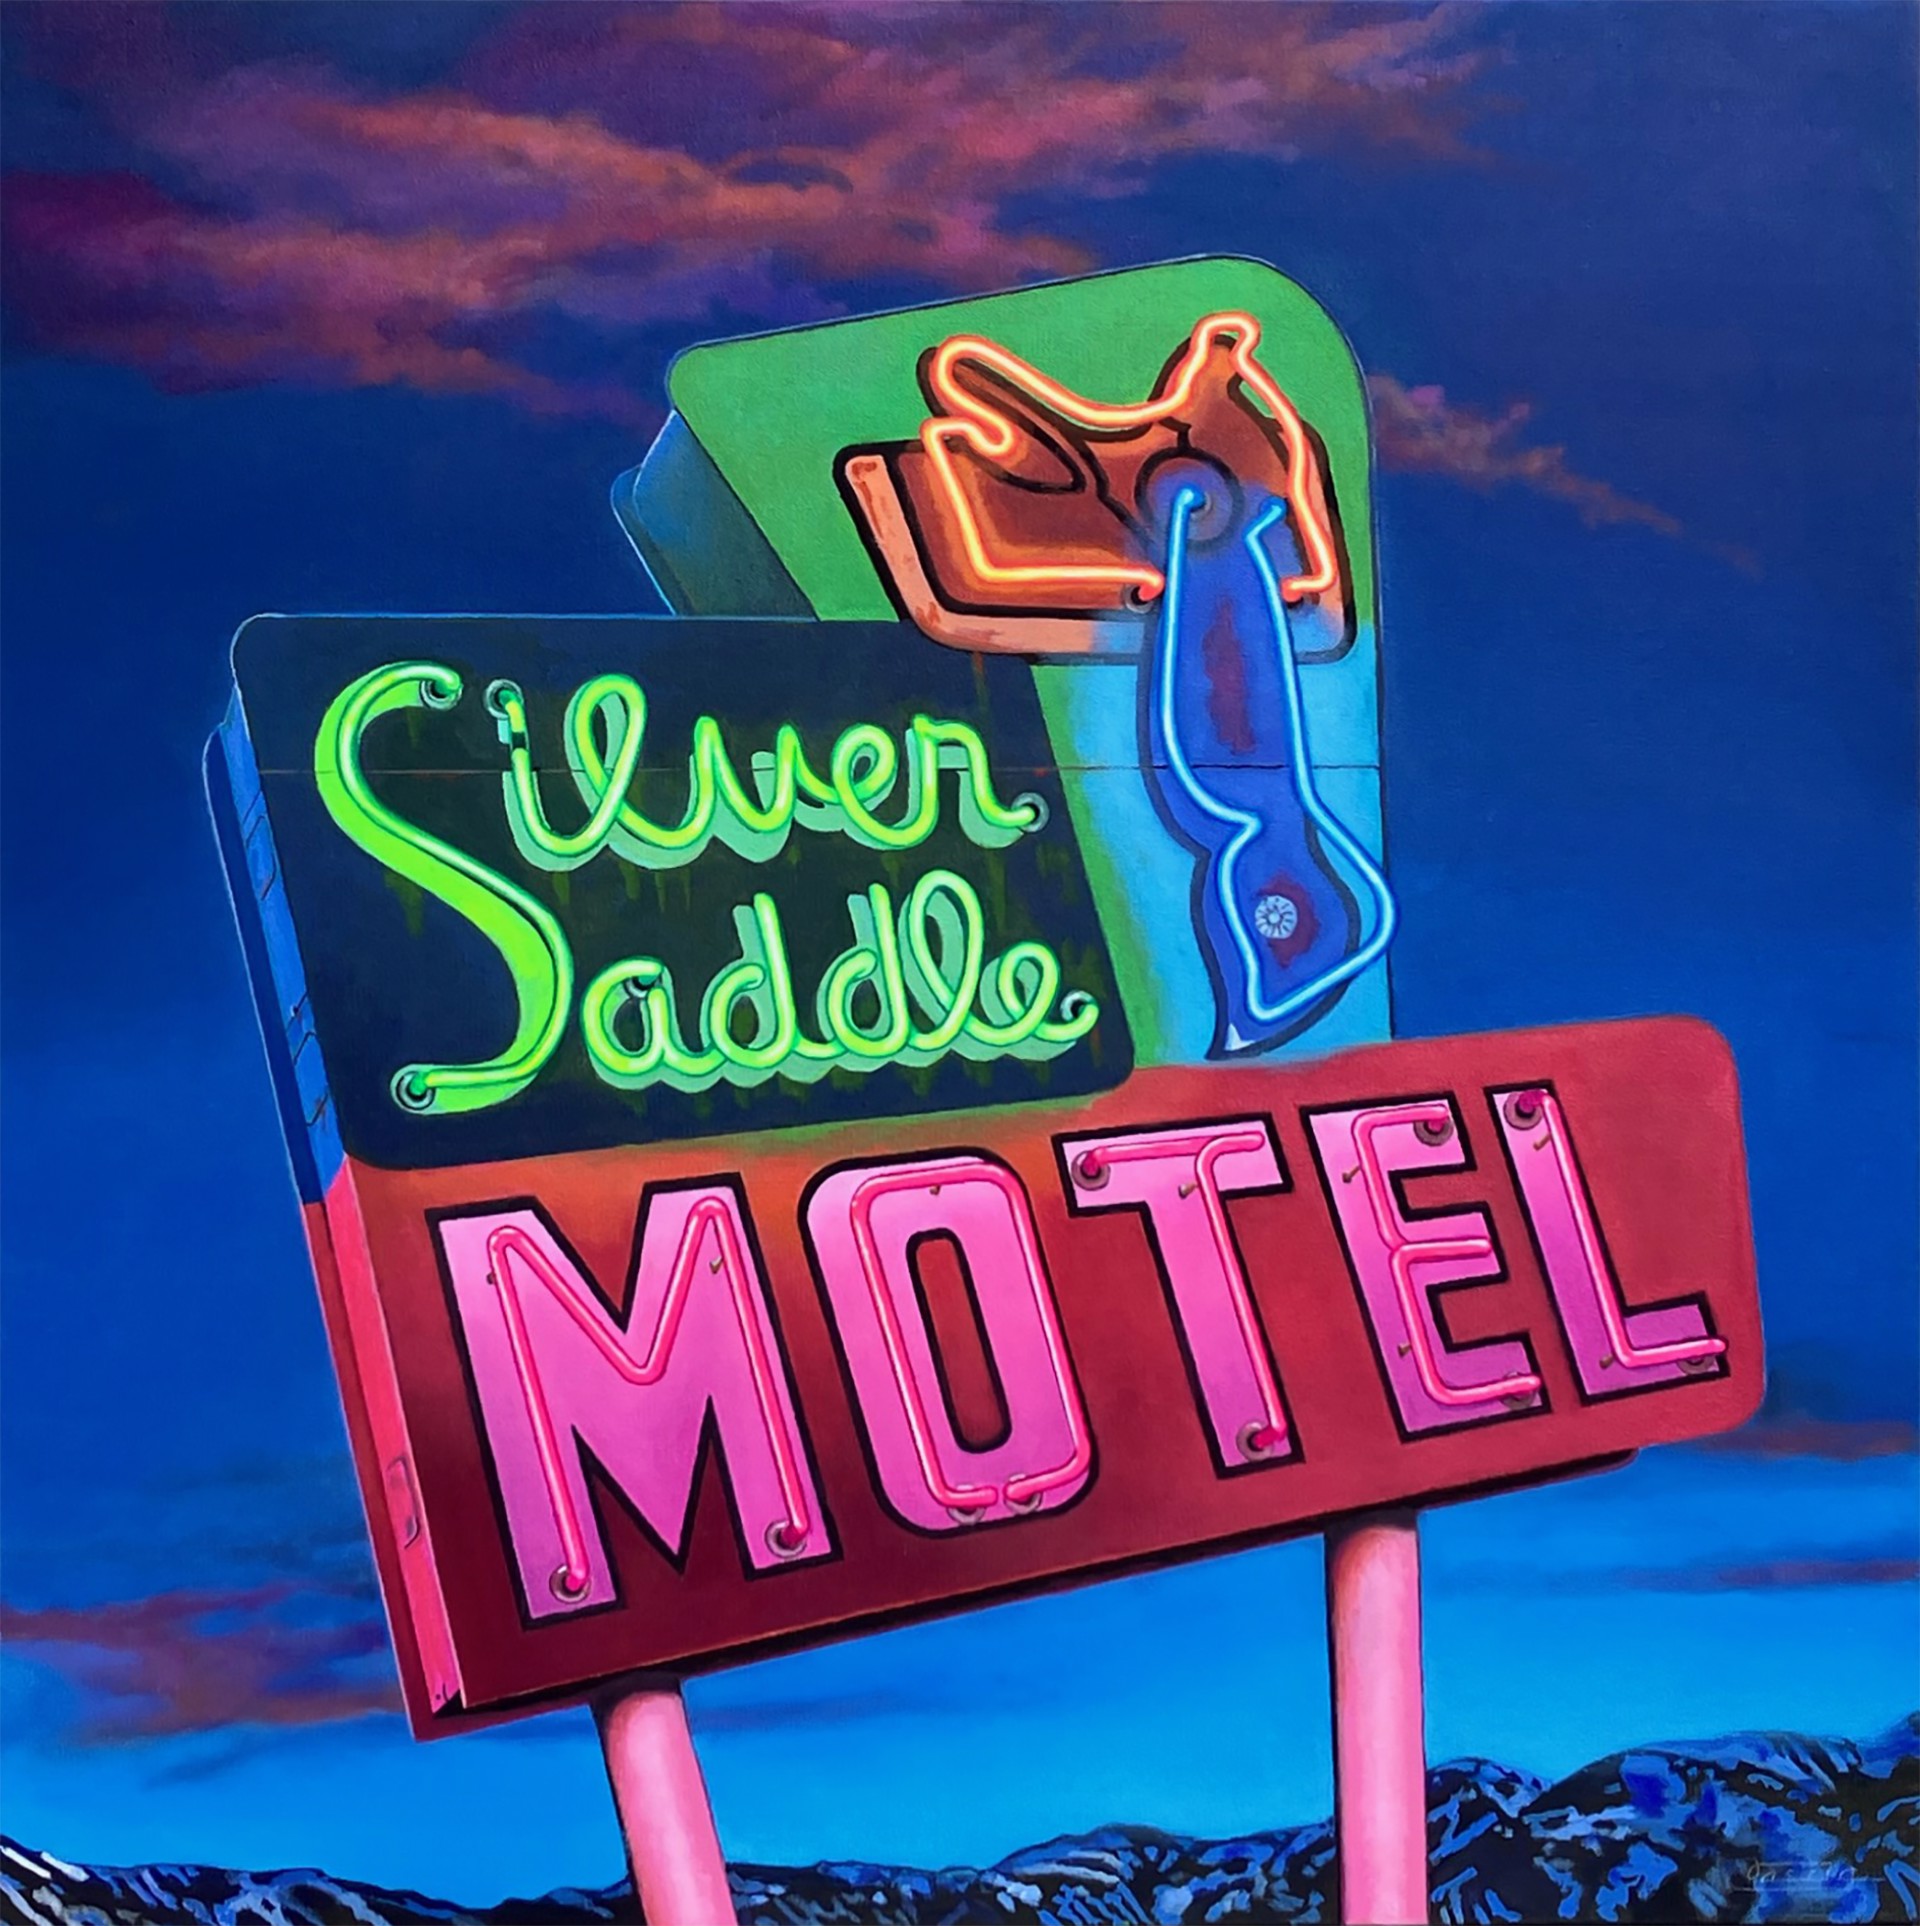 Silver Saddle by Bruce Cascia